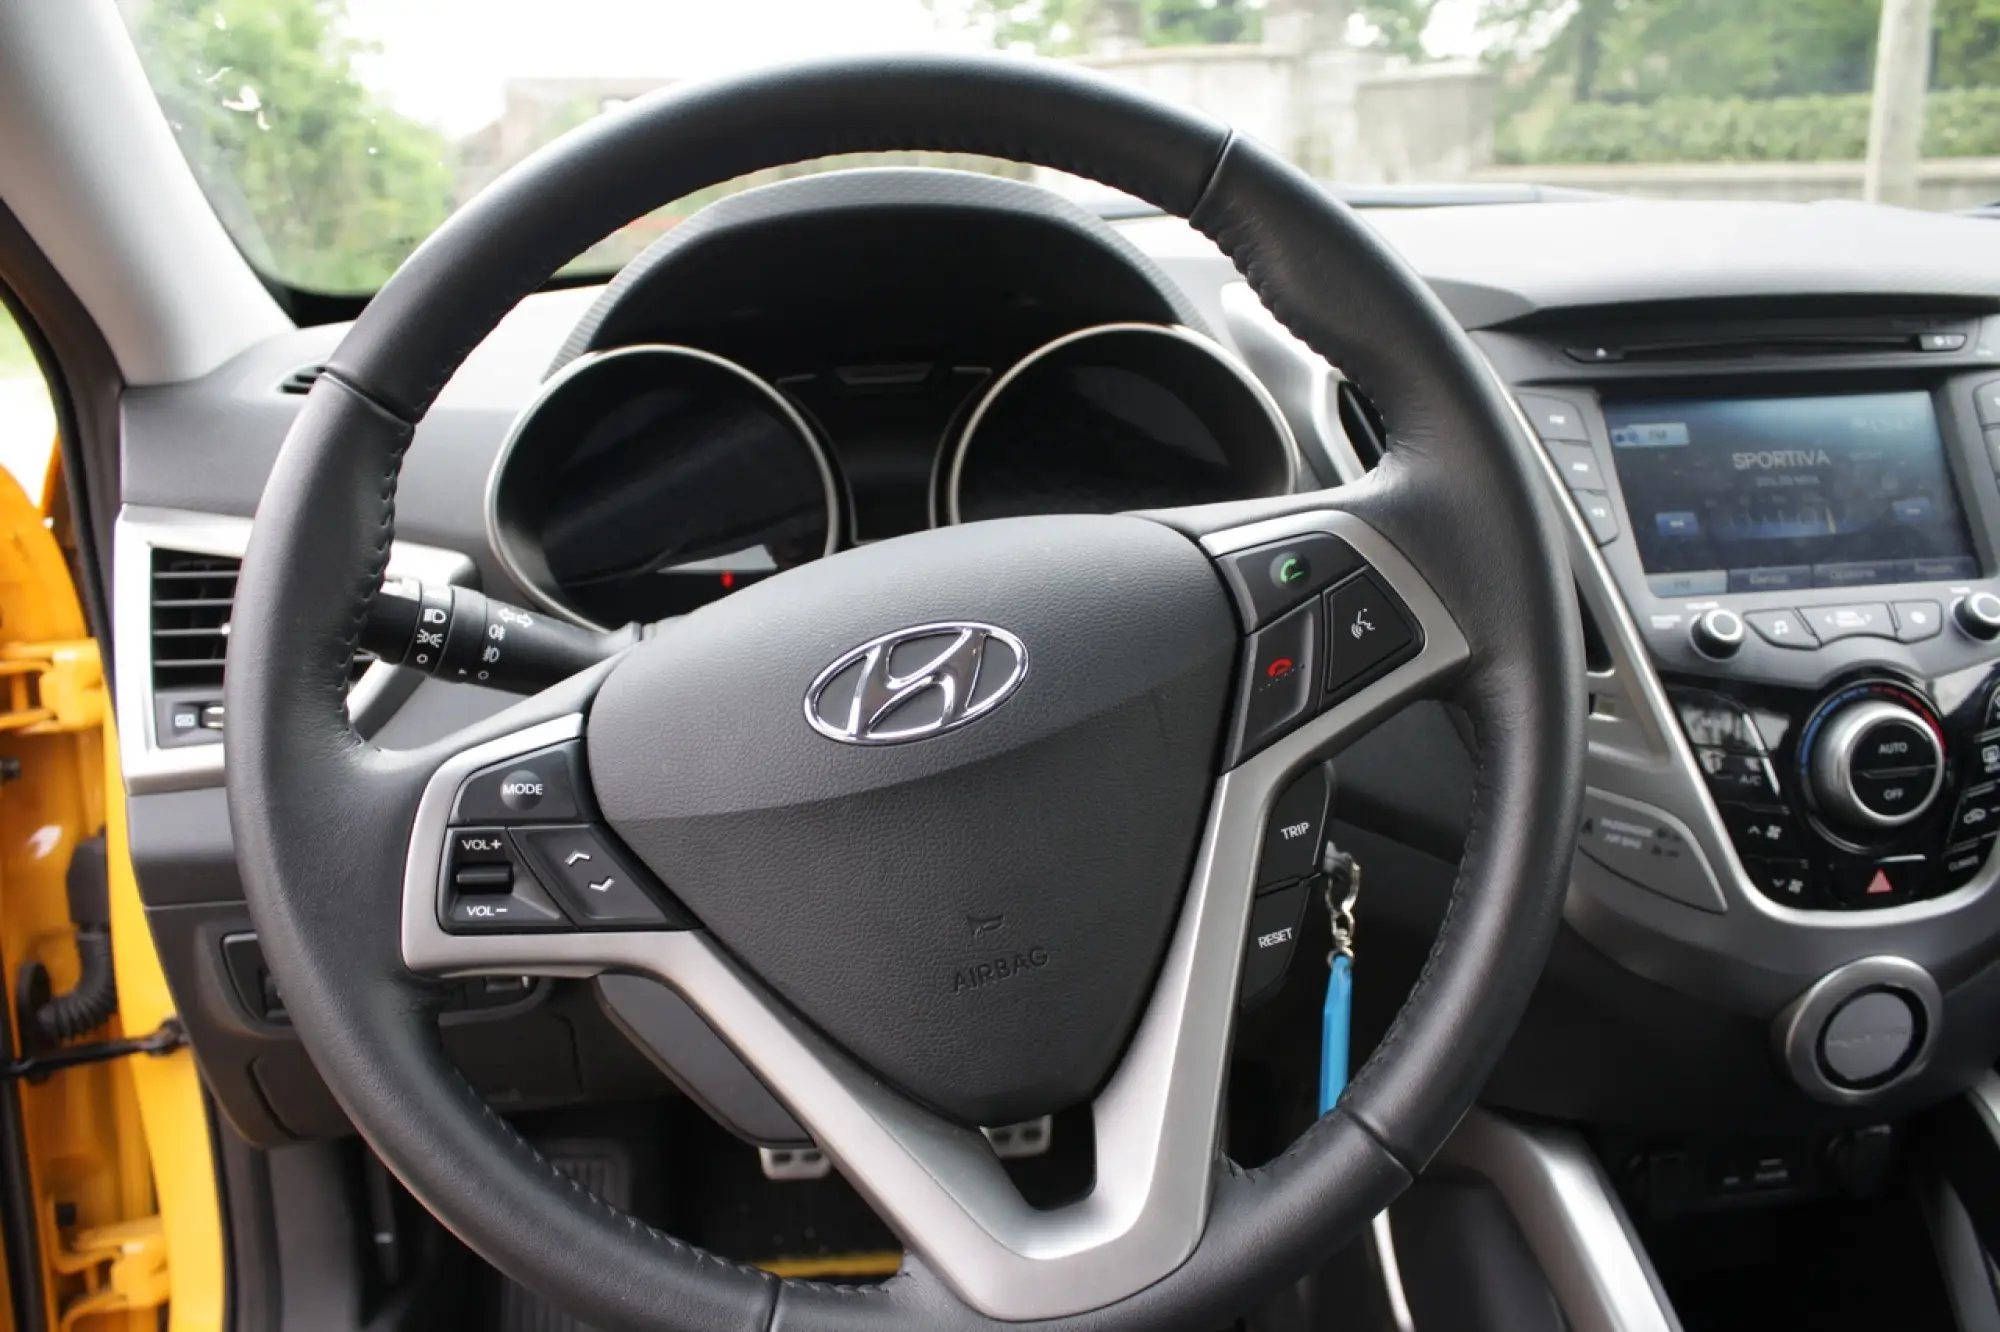 Hyundai Veloster - Test Drive 2012 - 111